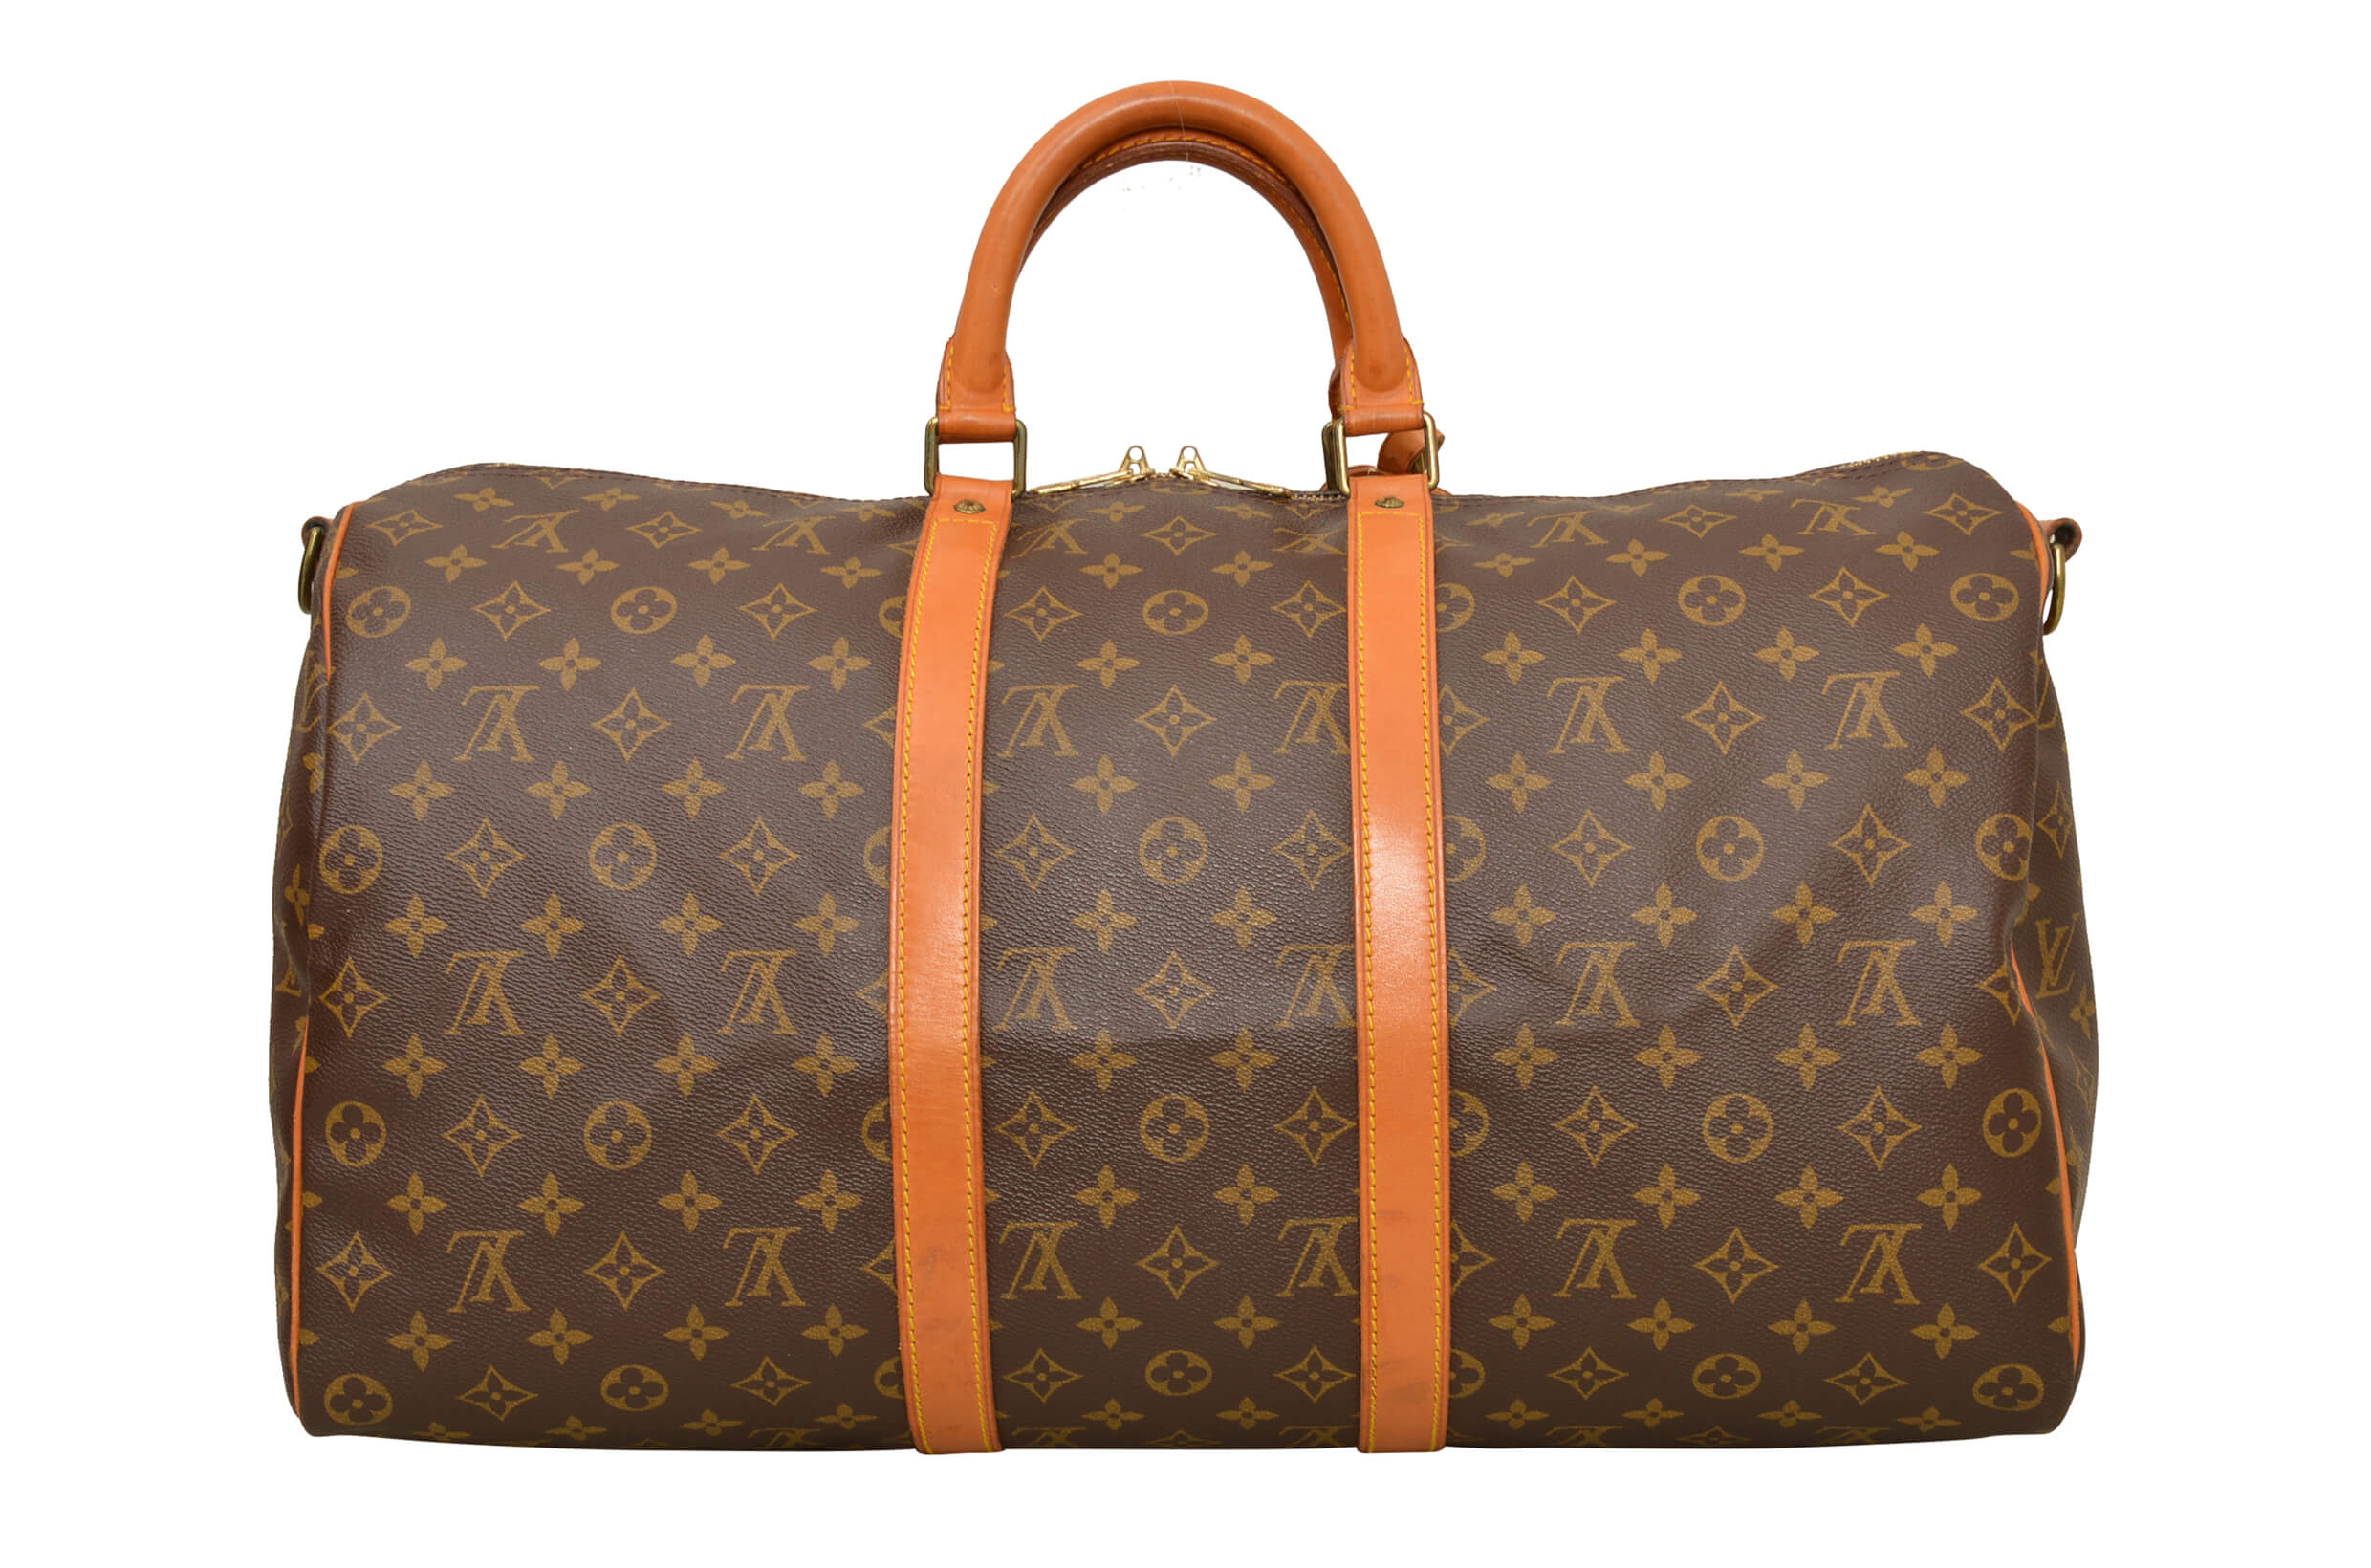 Louis Vuitton Monogram Keepall 50 Bandouliere Travel Bag / Strap M41416 - D02089 | eBay